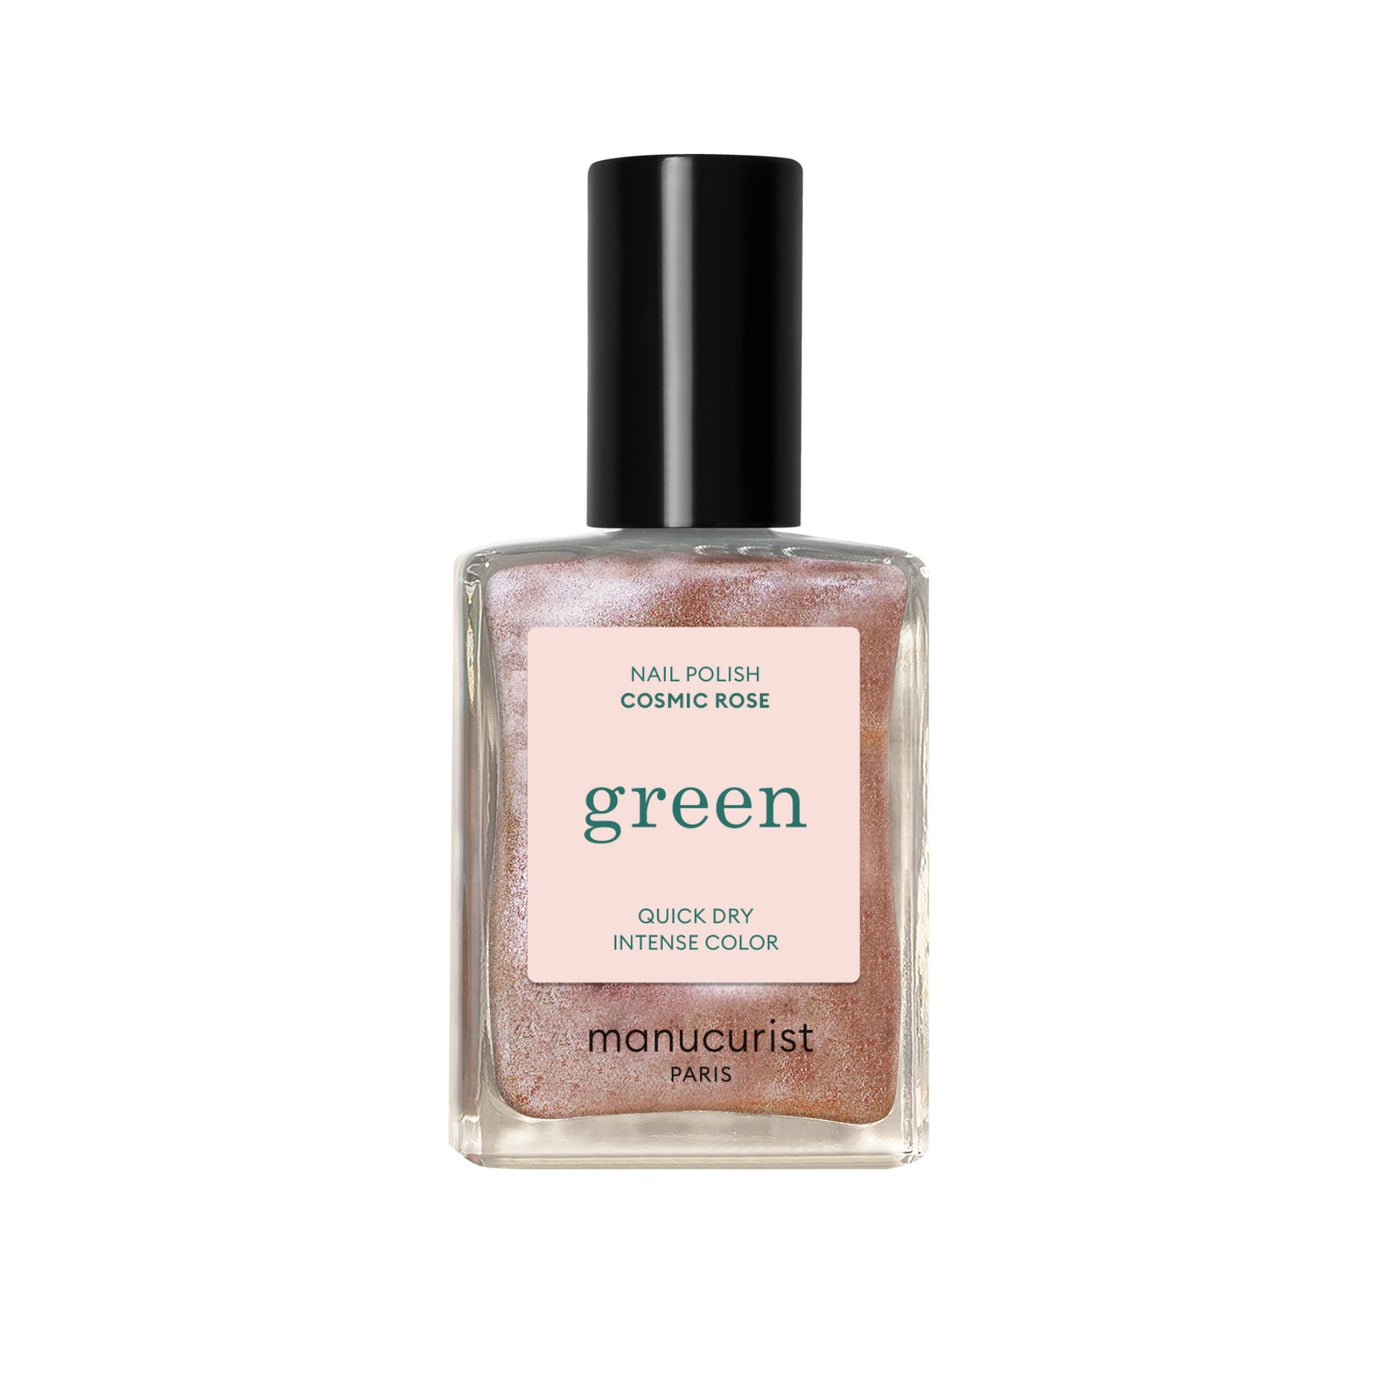 Manucurist Green Nail Polish - Cosmic Rose